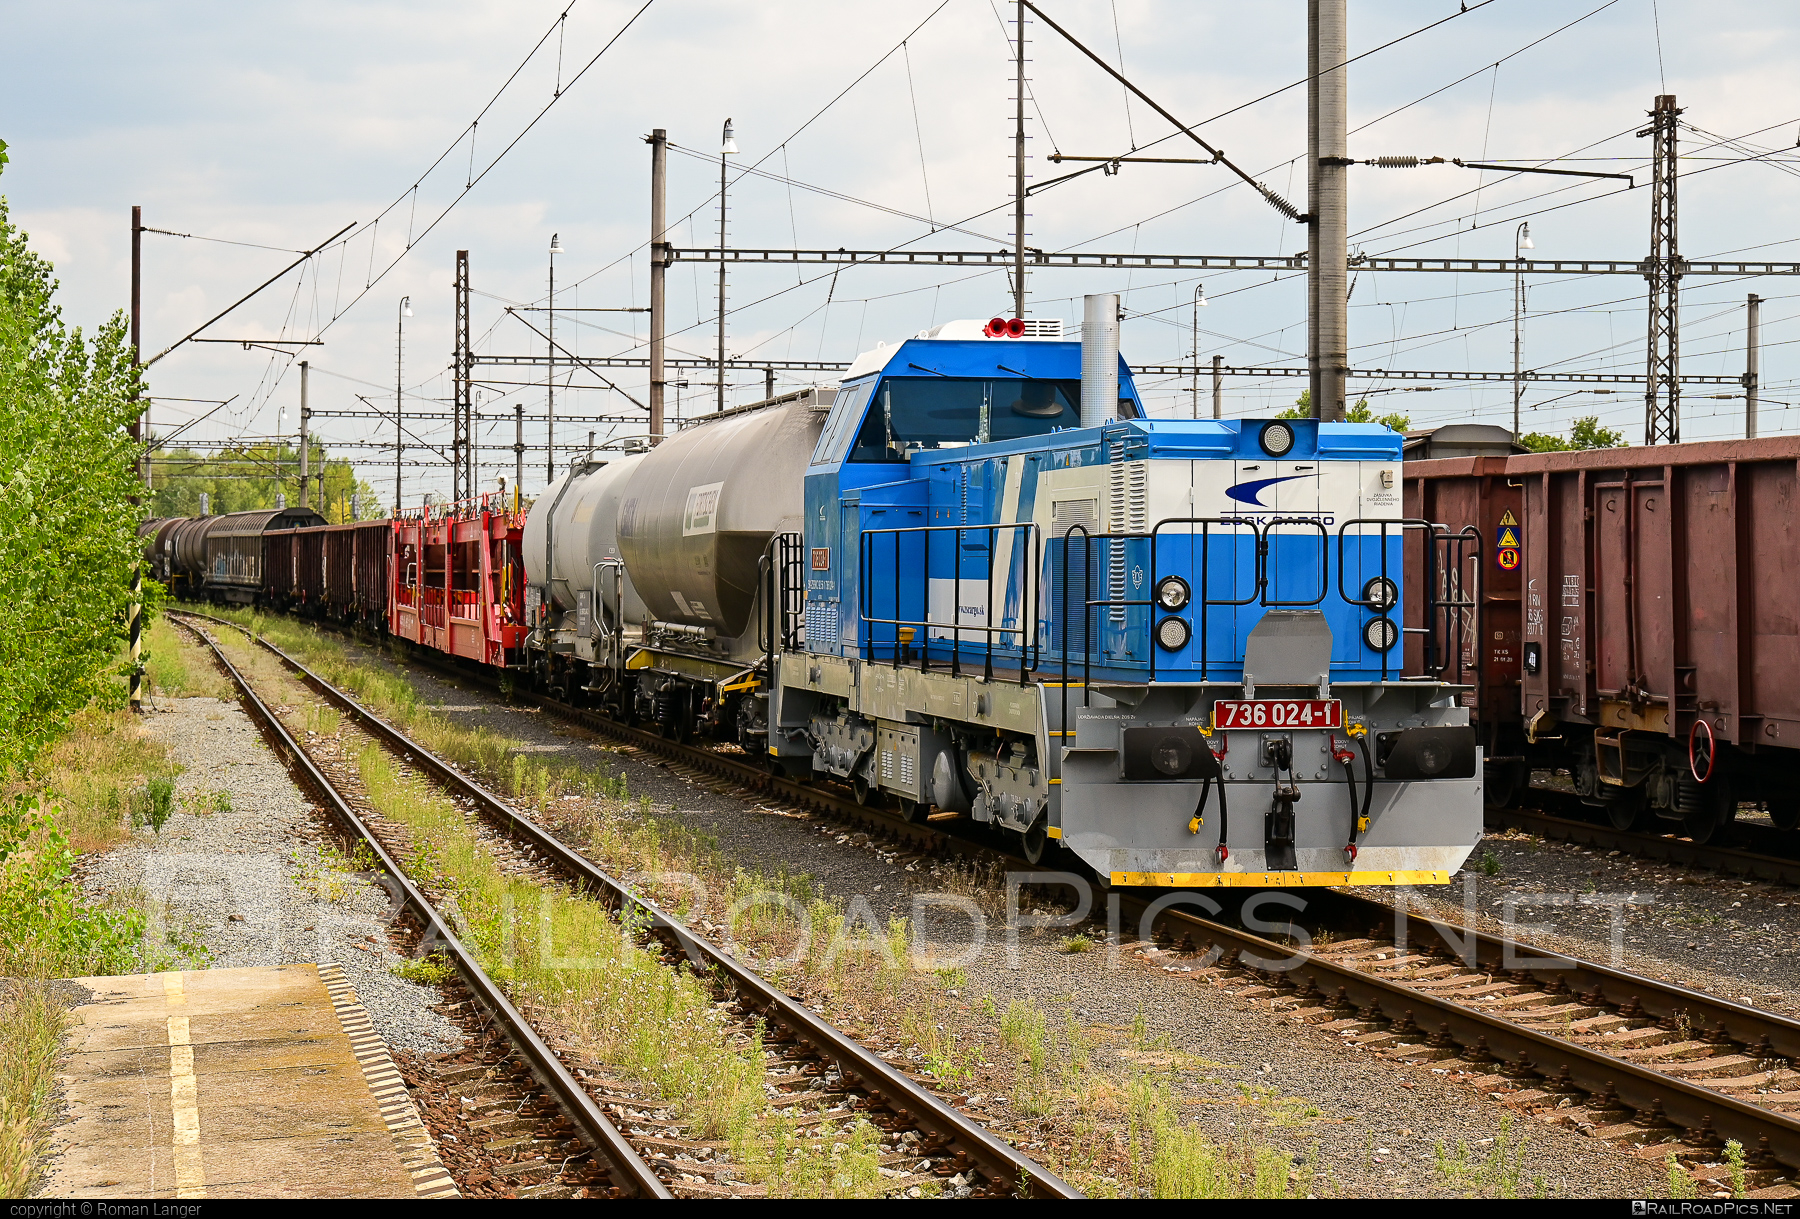 ŽOS Zvolen Class 736 - 736 024-1 operated by Železničná Spoločnost' Cargo Slovakia a.s. #ZeleznicnaSpolocnostCargoSlovakia #locomotive736 #mixofcargo #zoszvolen #zoszvolen736 #zsskcargo